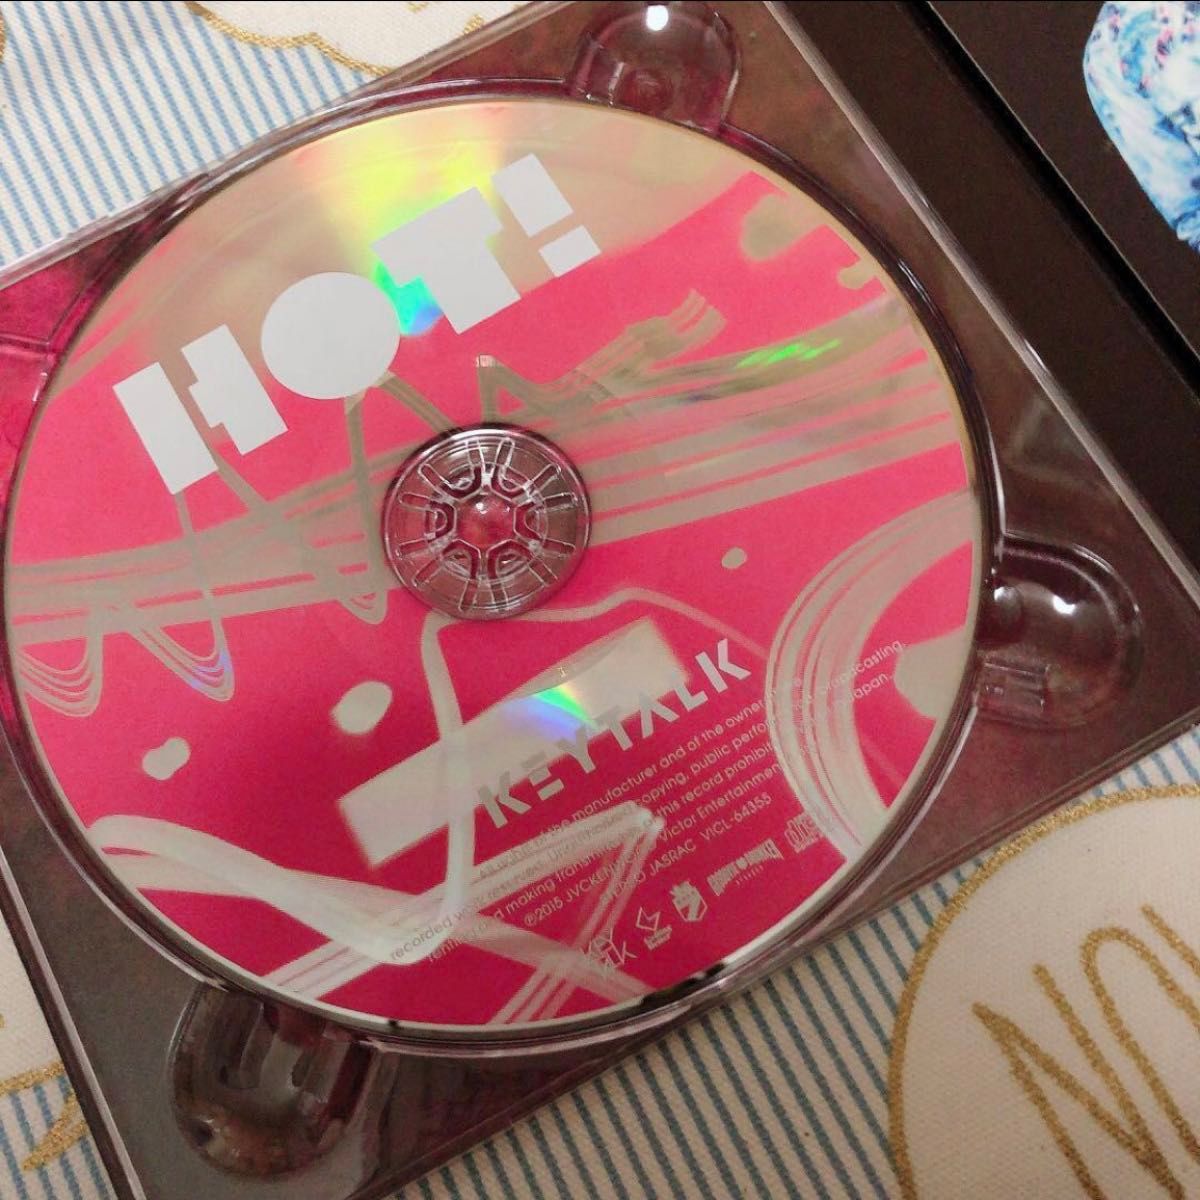 KEYTALK キートーク　CD アルバム 初回限定 DVD　HOT コースター　フレーバー　FLAVOR 缶バッジ　サイン　巨匠